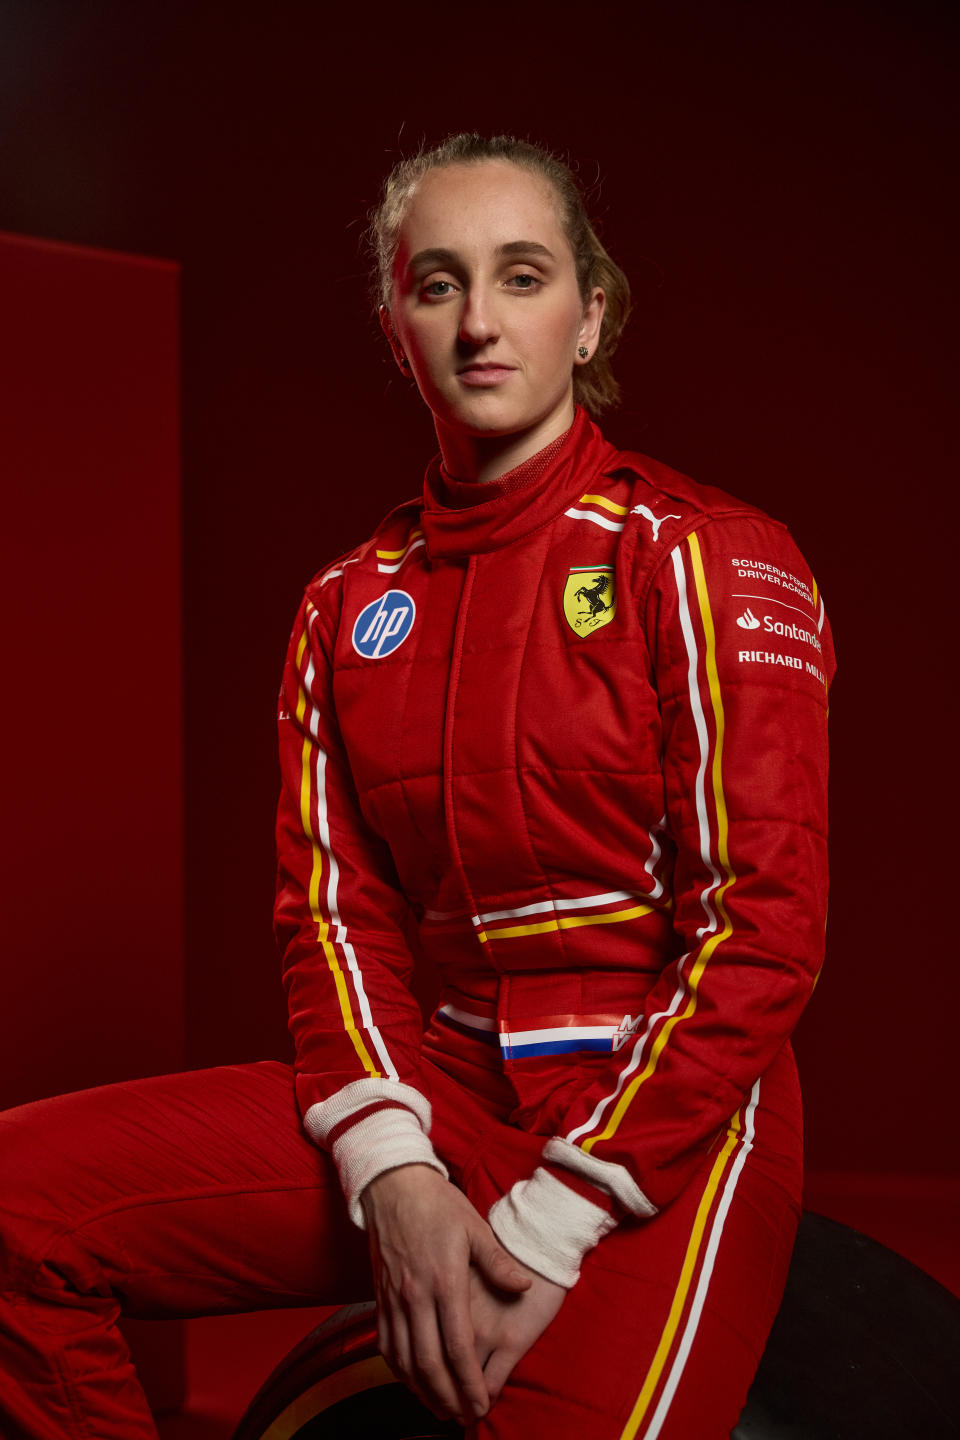 The Scuderia Ferrari Esports team and the Scuderia Ferrari car driven by Maya Weug in the all-female F1 Academy series launched in 2023, will race using the new moniker, Scuderia Ferrari HP.